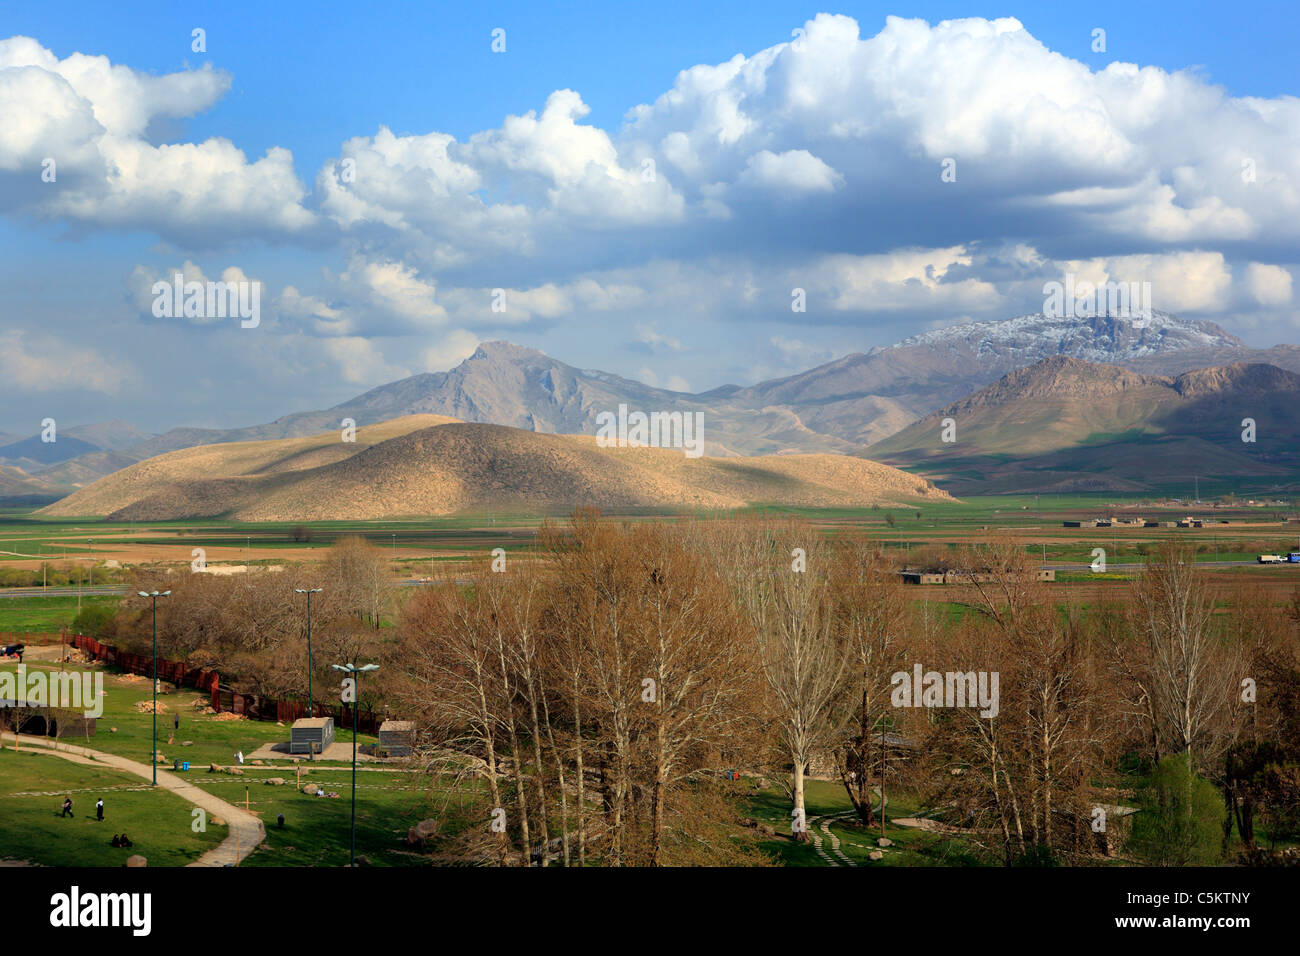 (Bisoutun Behistoun), province Kermanshah, Iran Banque D'Images